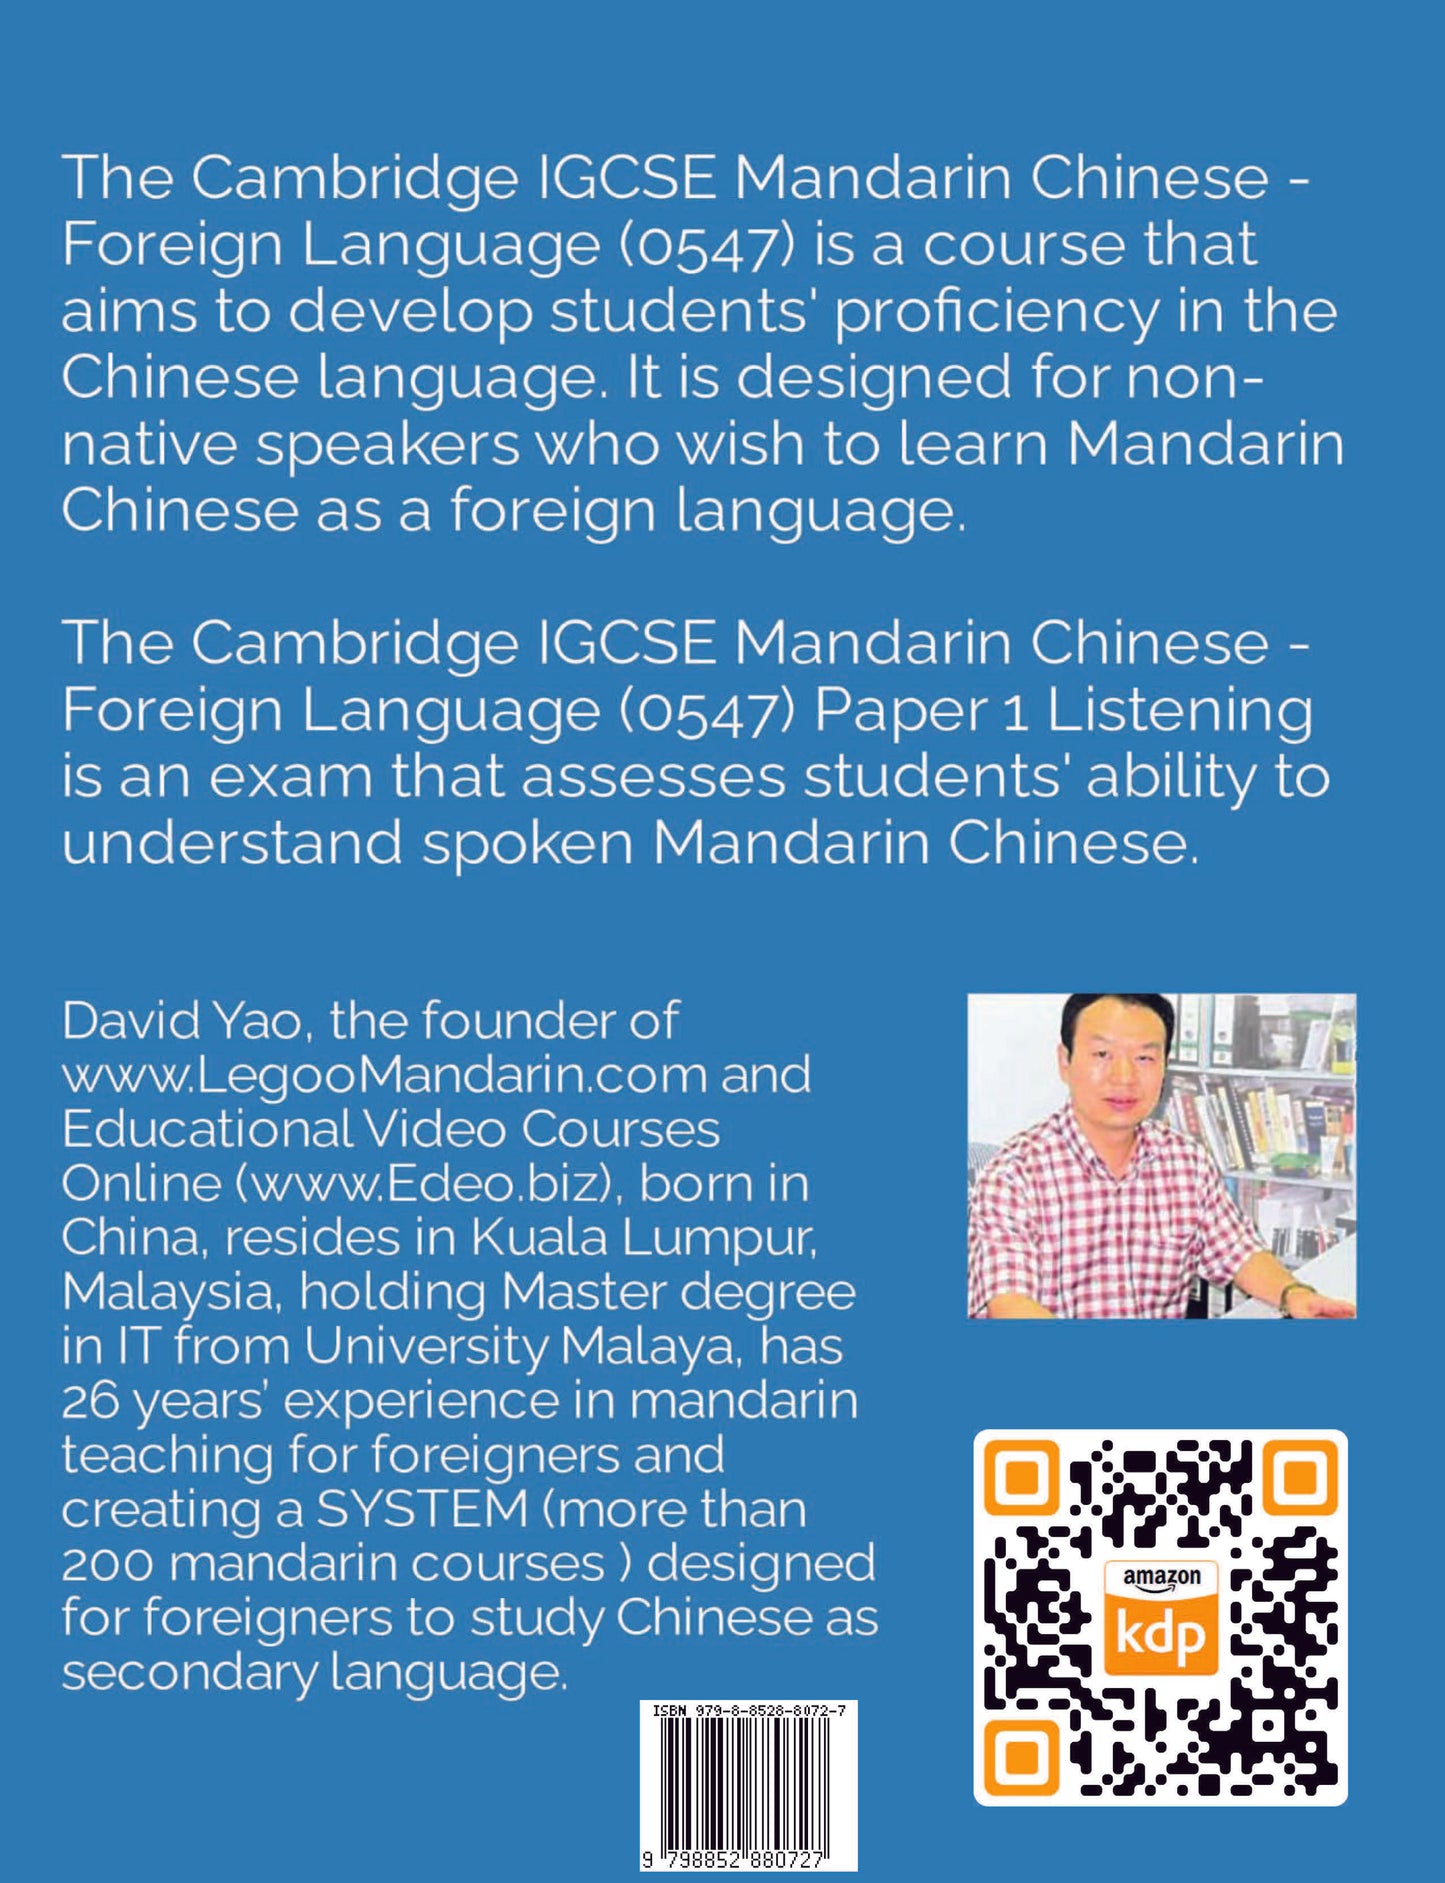 Cambridge IGCSE Chinese 0547-13 Paper 1 2022 Listening Set 3